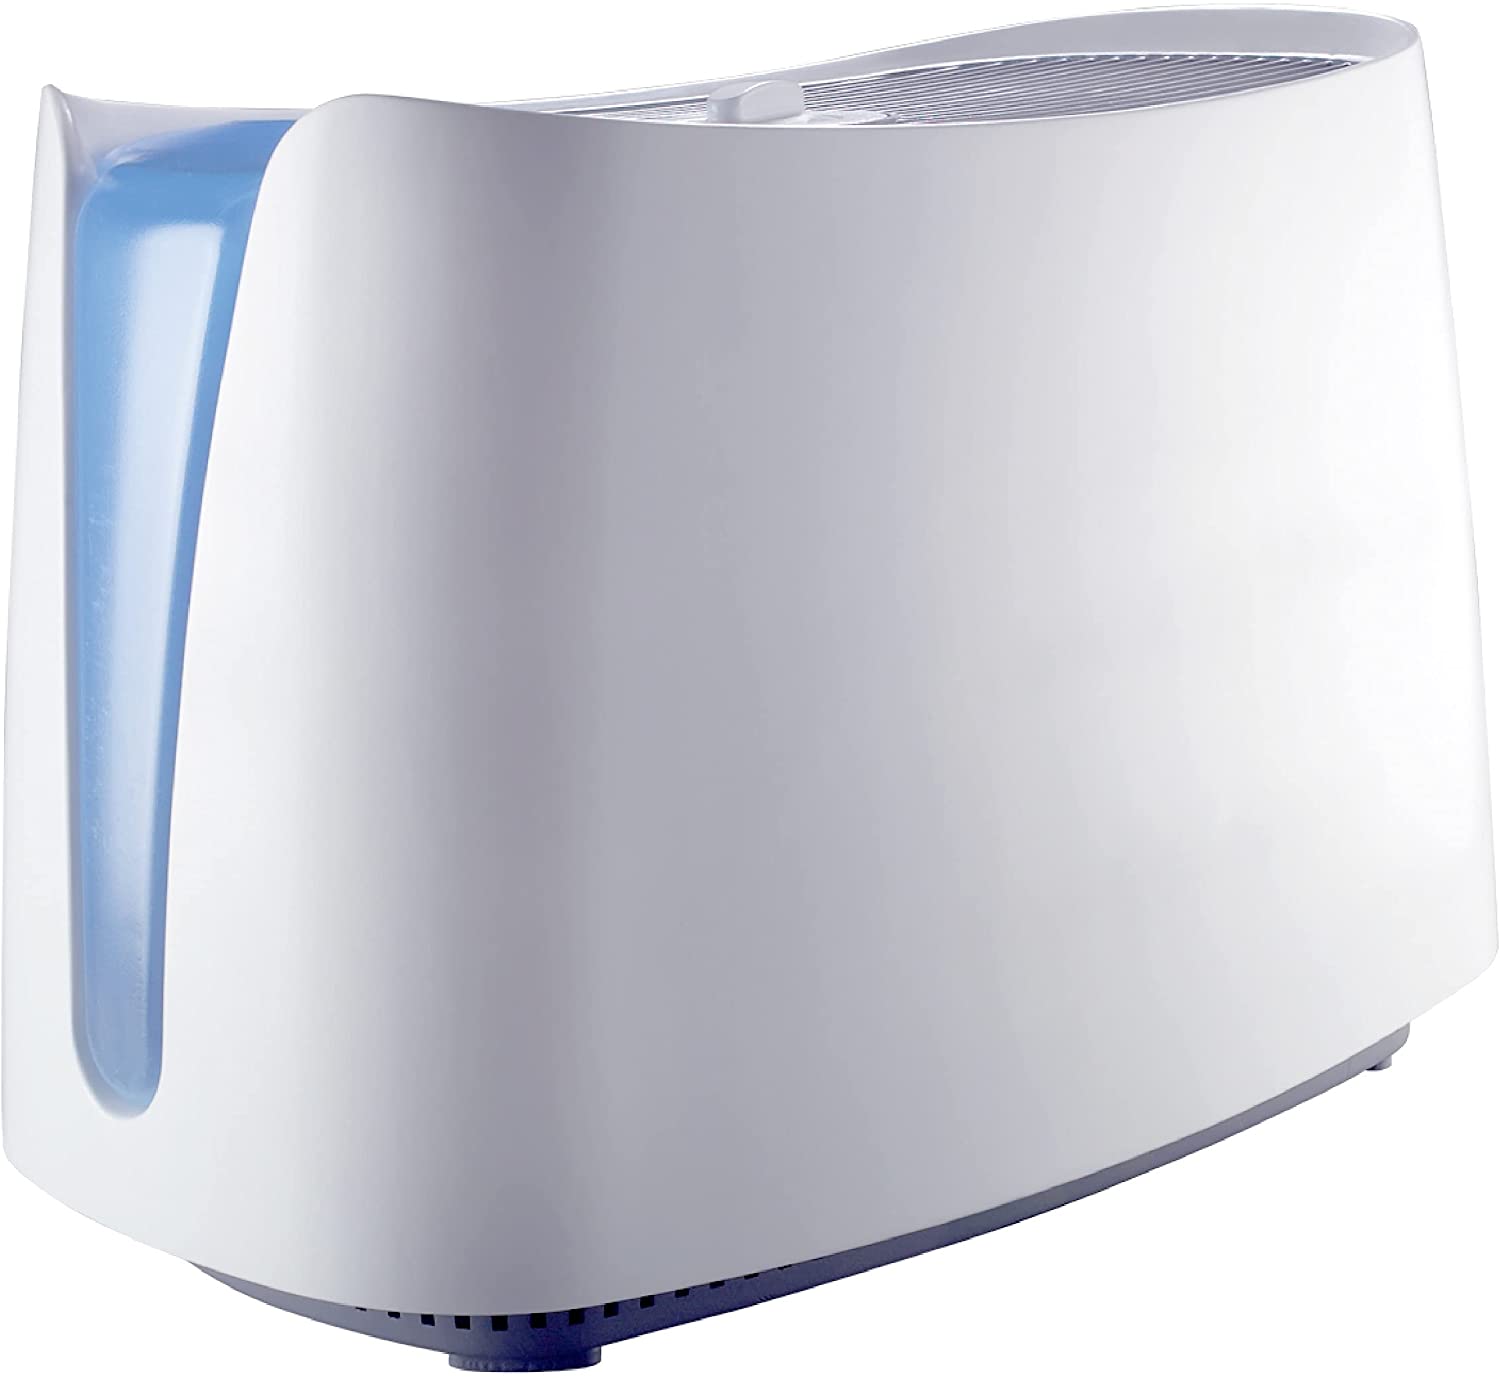 Honeywell HCM350W Germ Free Cool Mist Humidifier